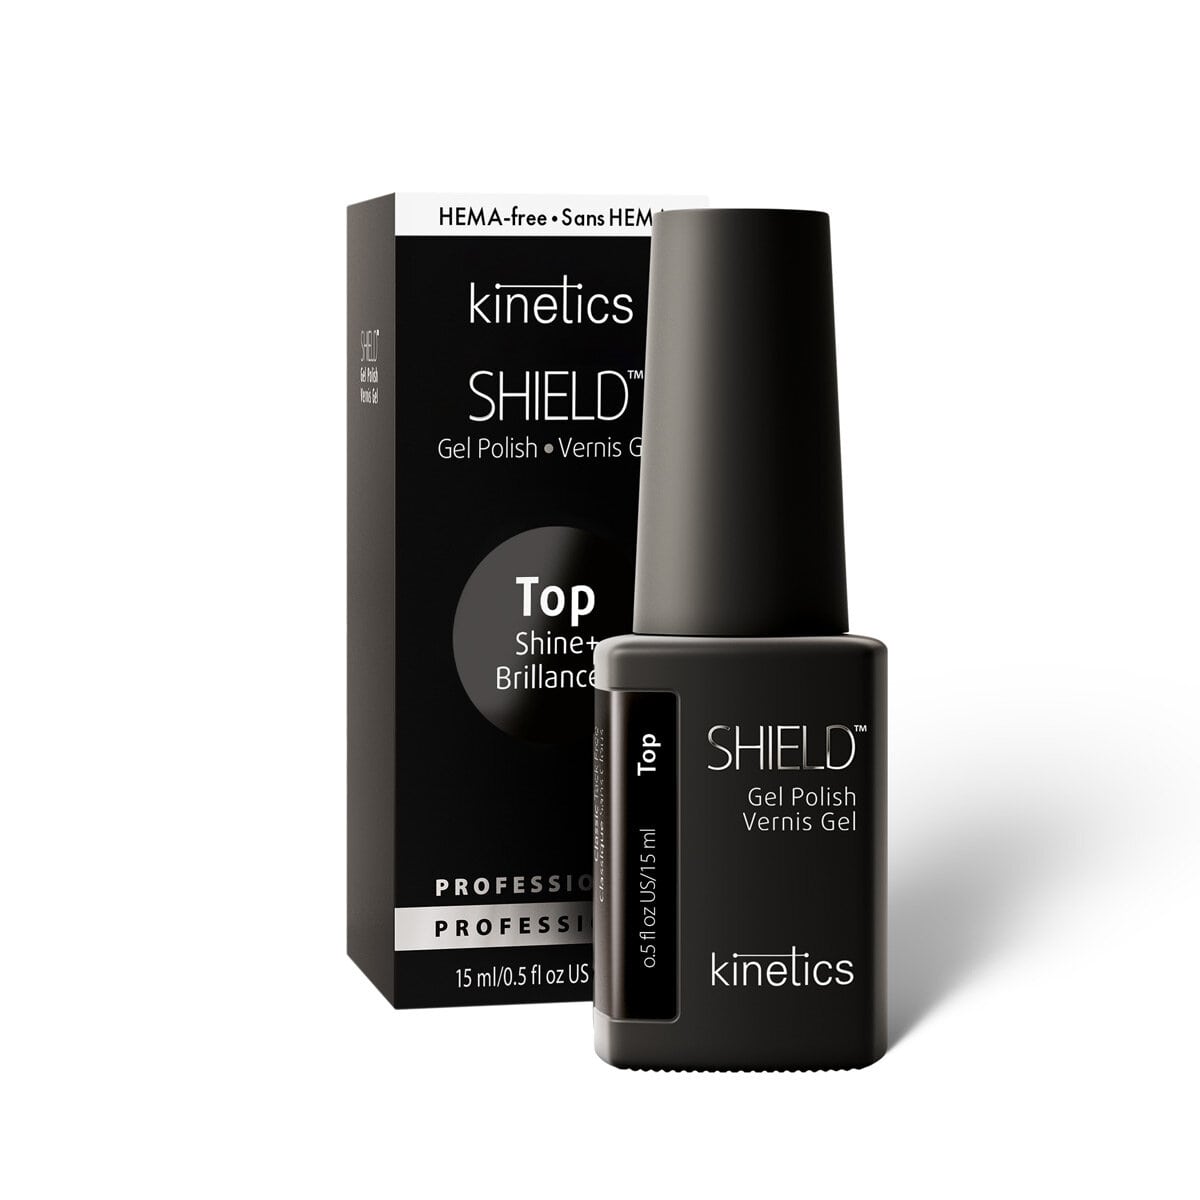 KINETICS Závěrečný gel lak - SHIELD (HEMA FREE) - Shine+Top Coat - 15 ml